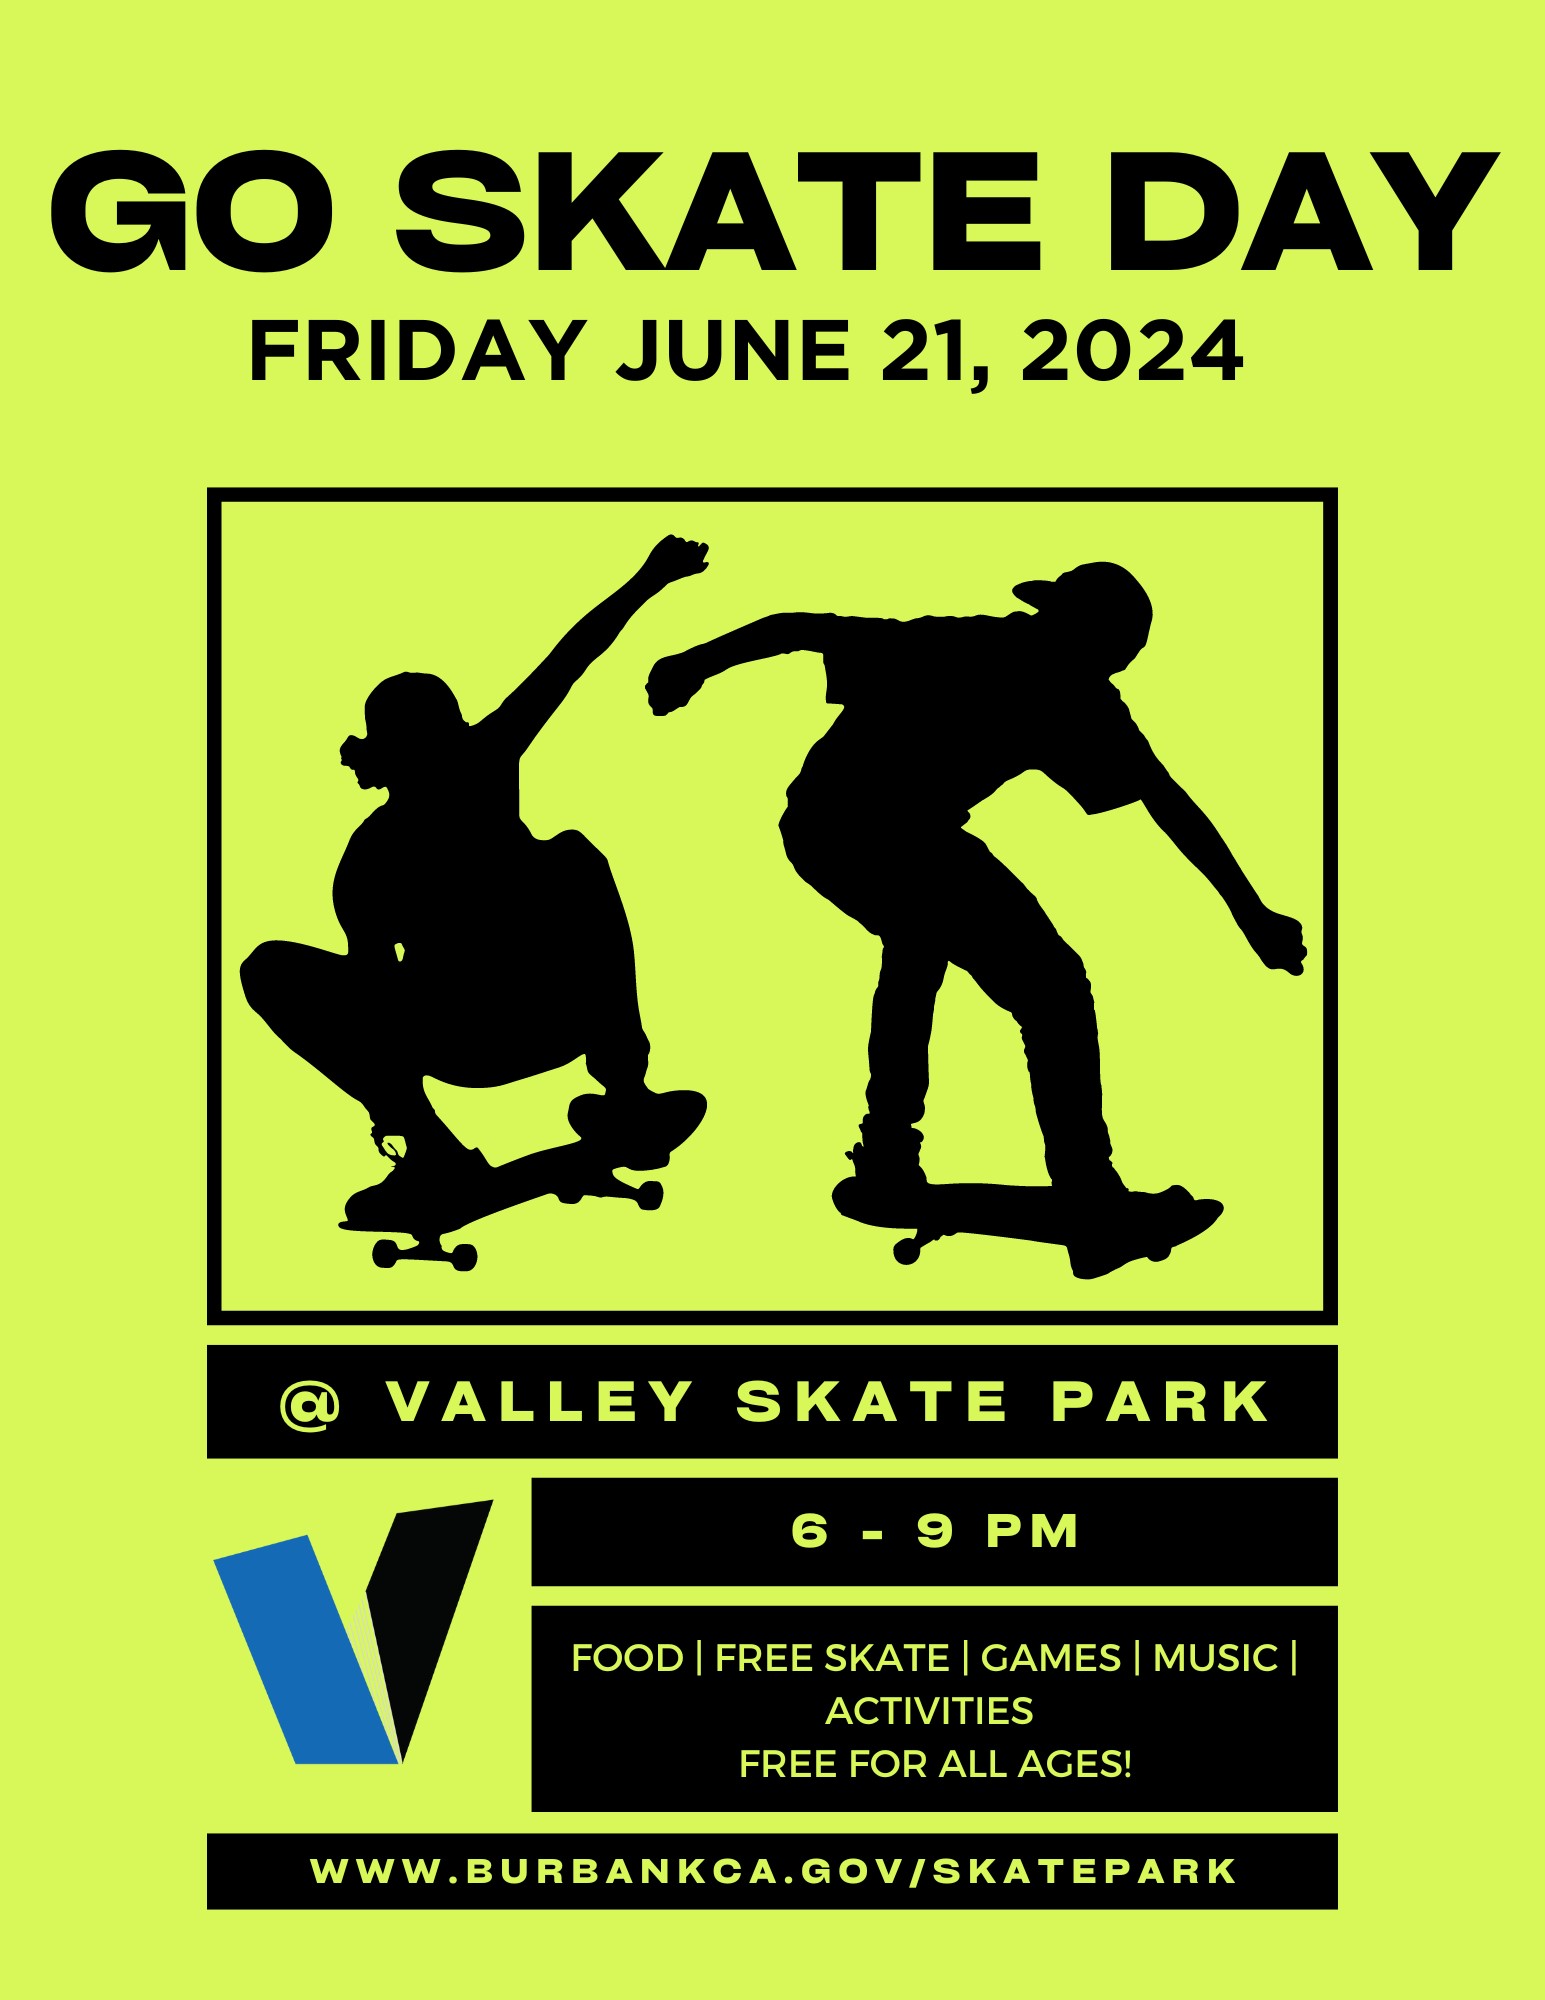 Go Skate Day Friday June 21 2024 @ Valley Skate Park 5 - 9 PM Food Free Skate Games Music Activities @Burbank_tens